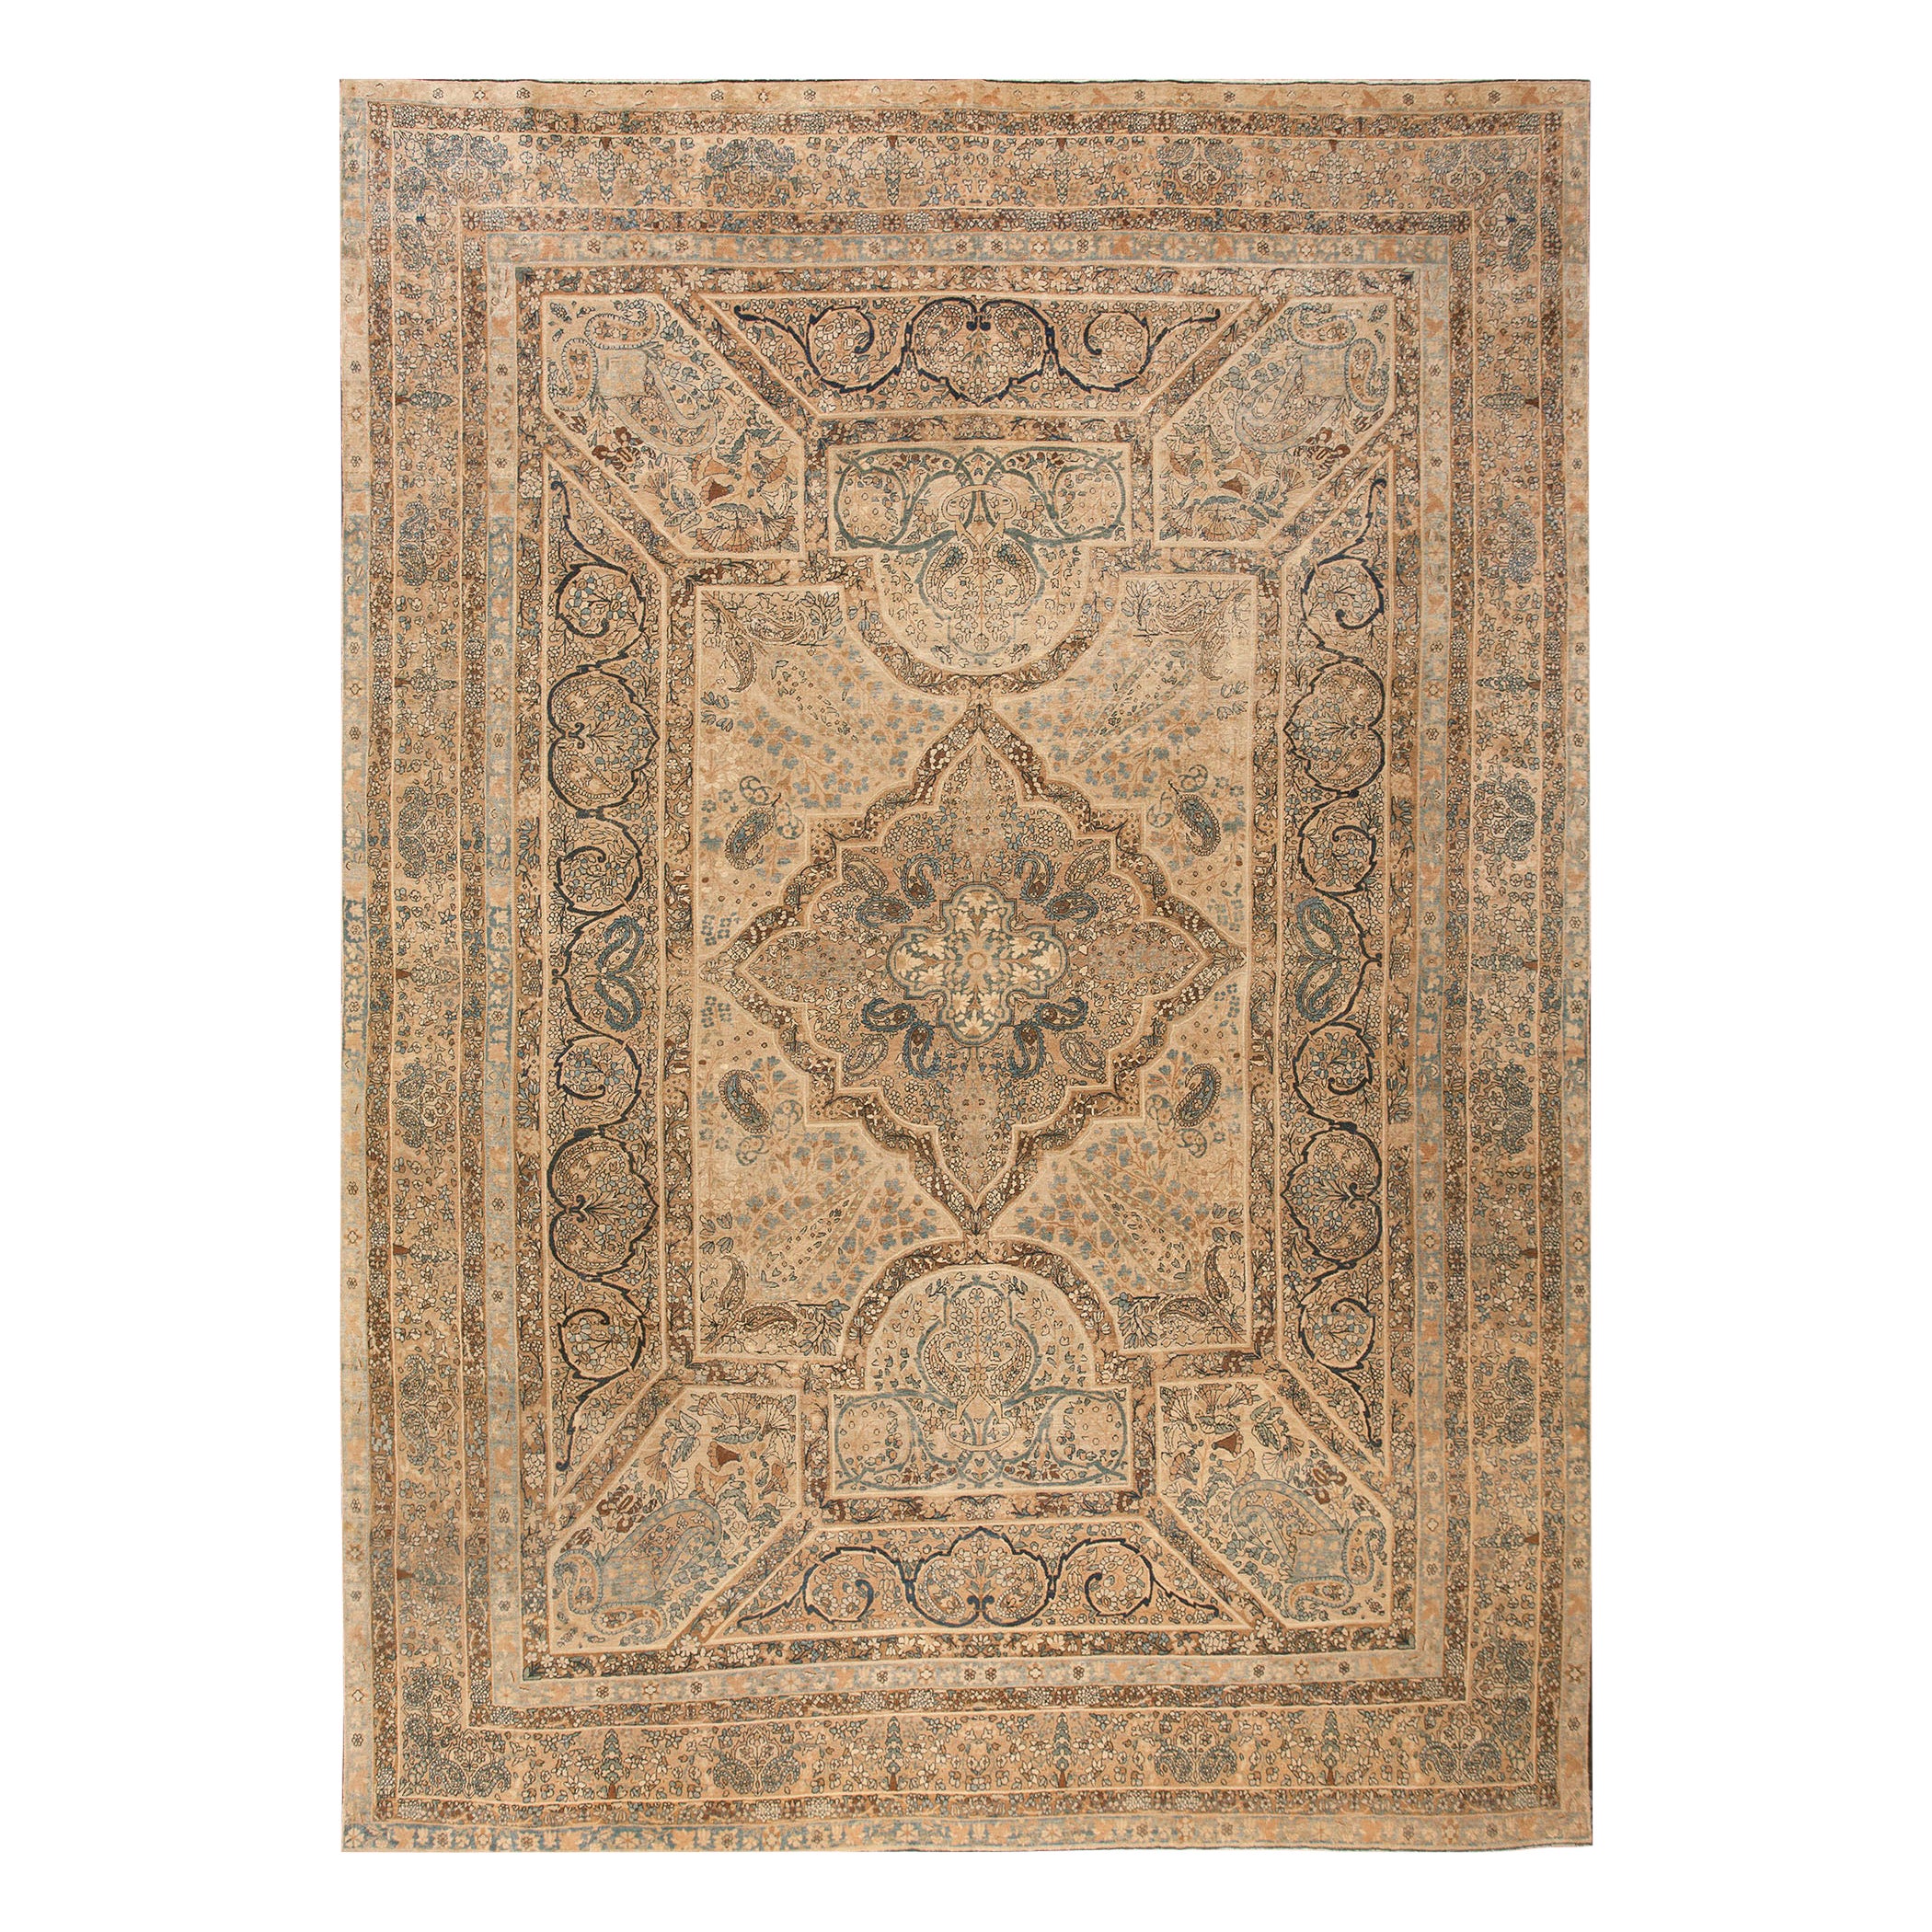 Early 20th Century Persian Kerman Carpet ( 10' 9'' x 14' 10'' - 328 x 453 cm )